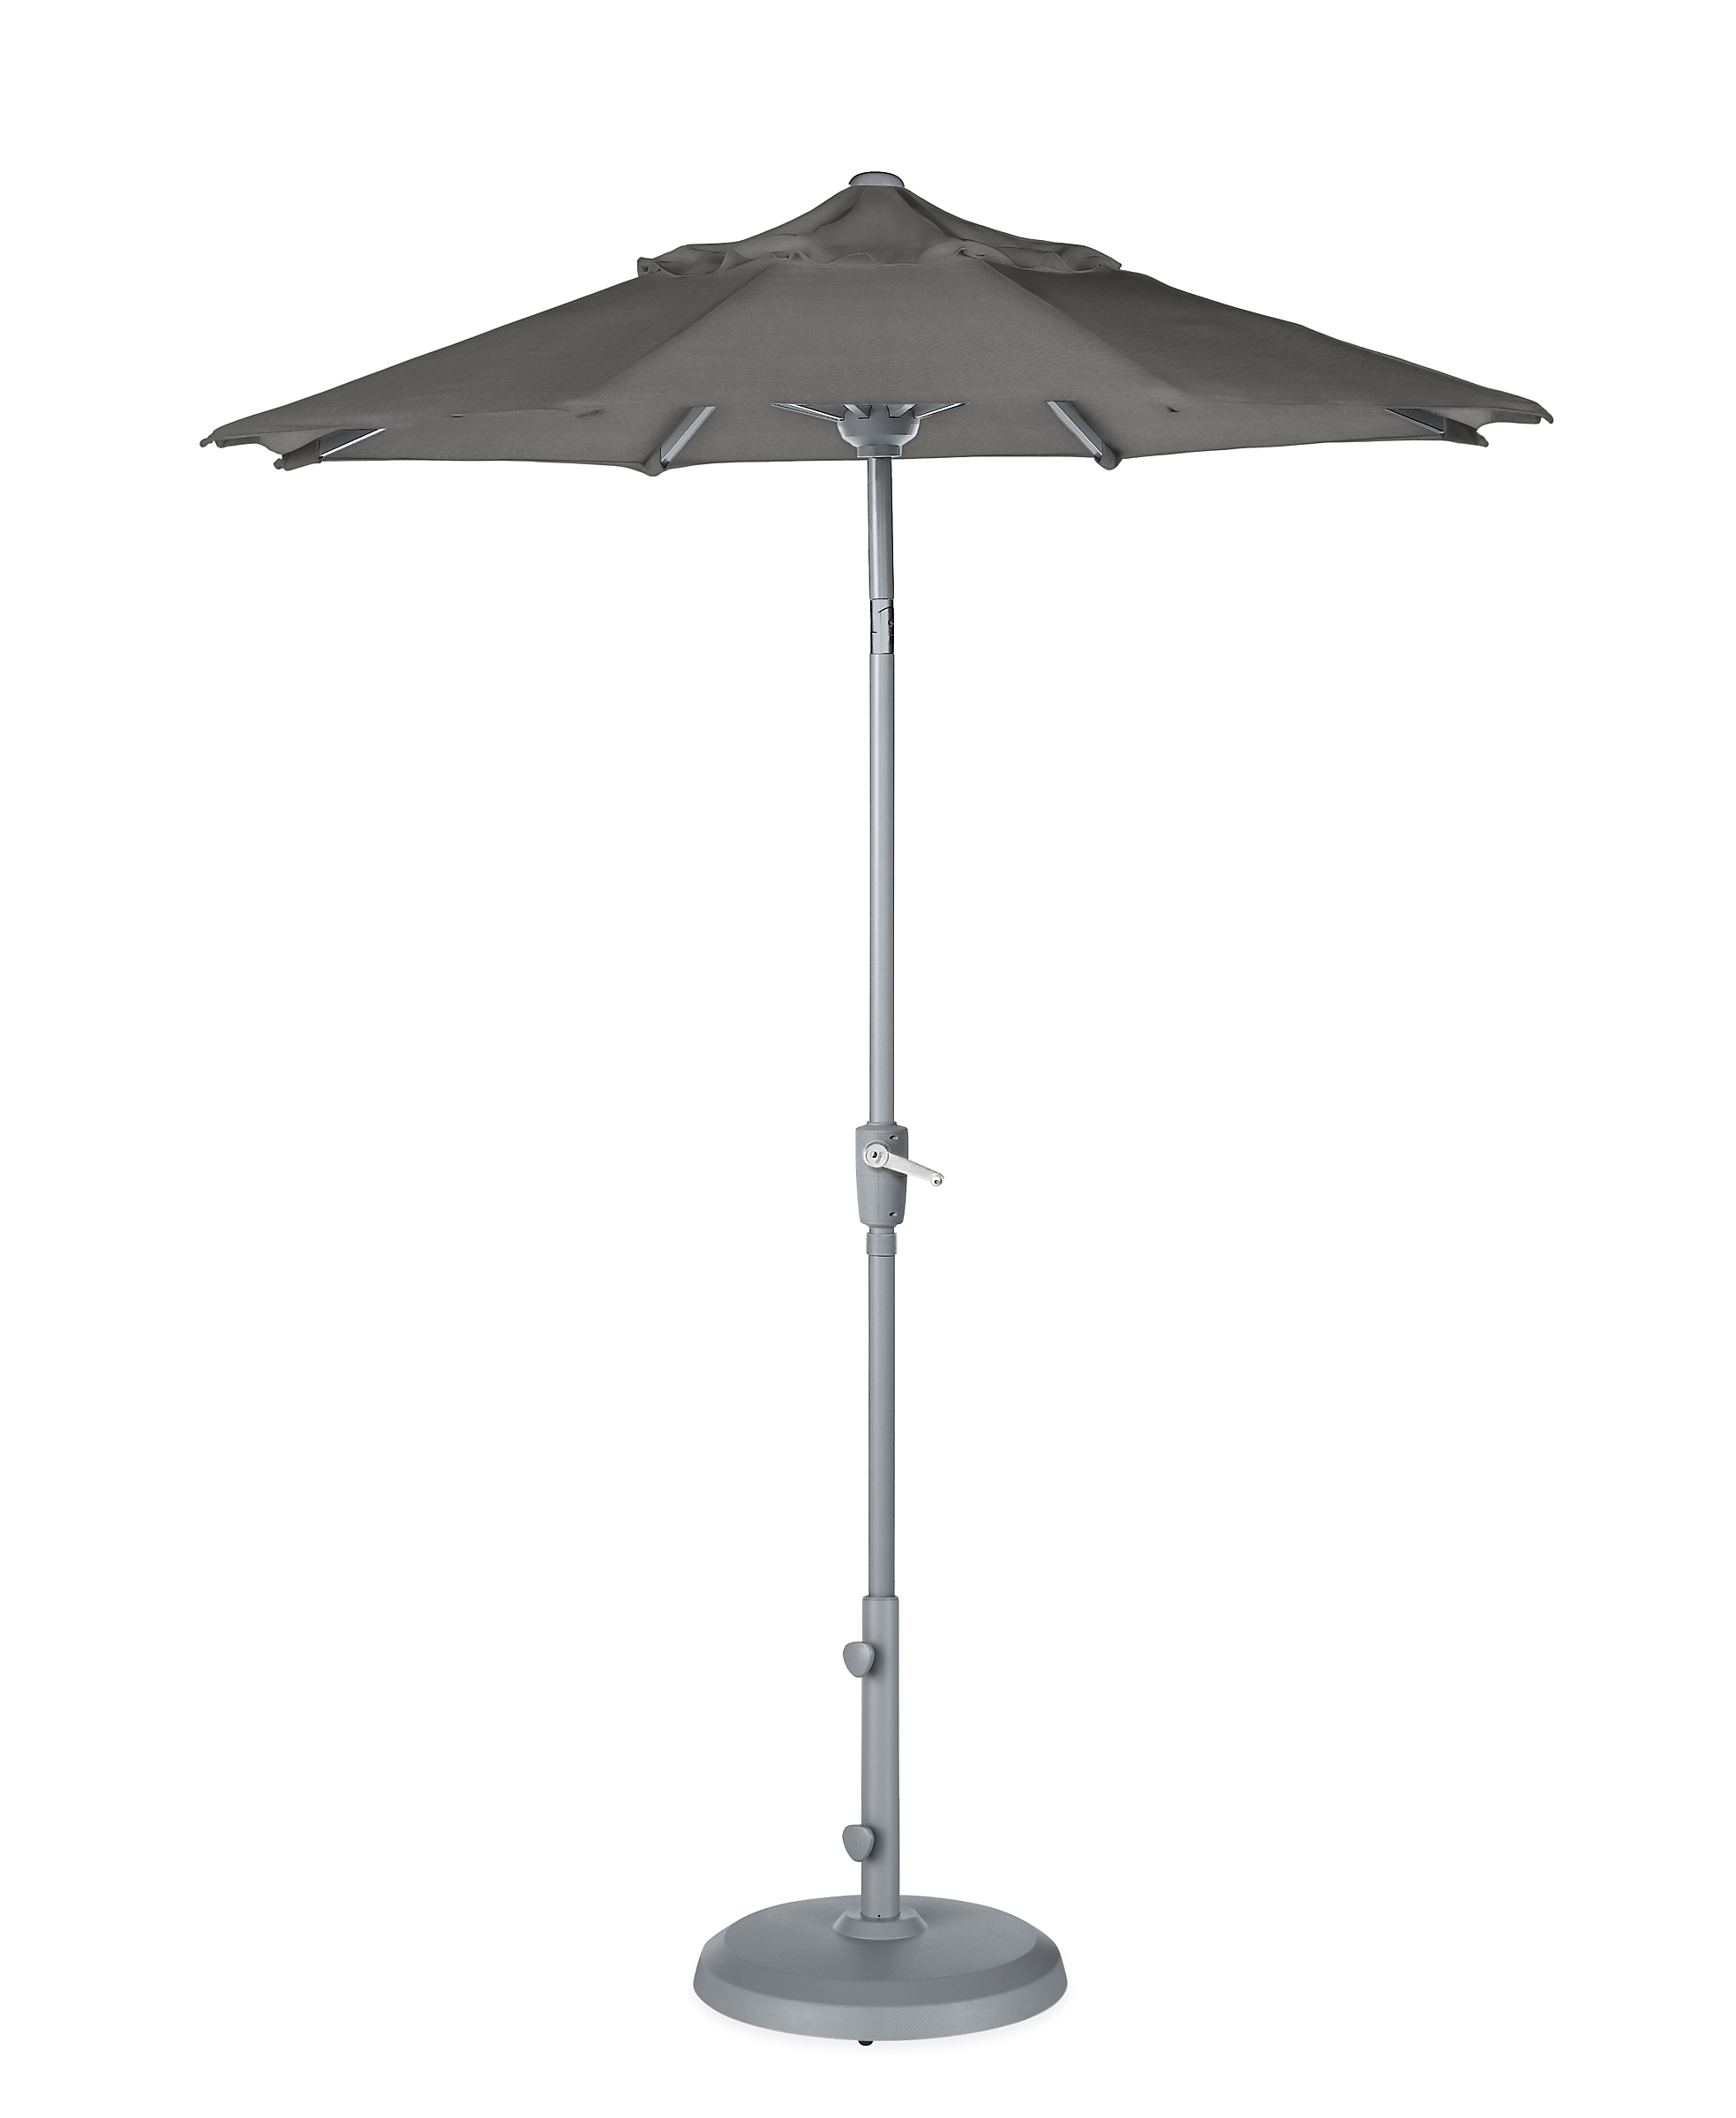 Maui 7.5' Round Patio Umbrella